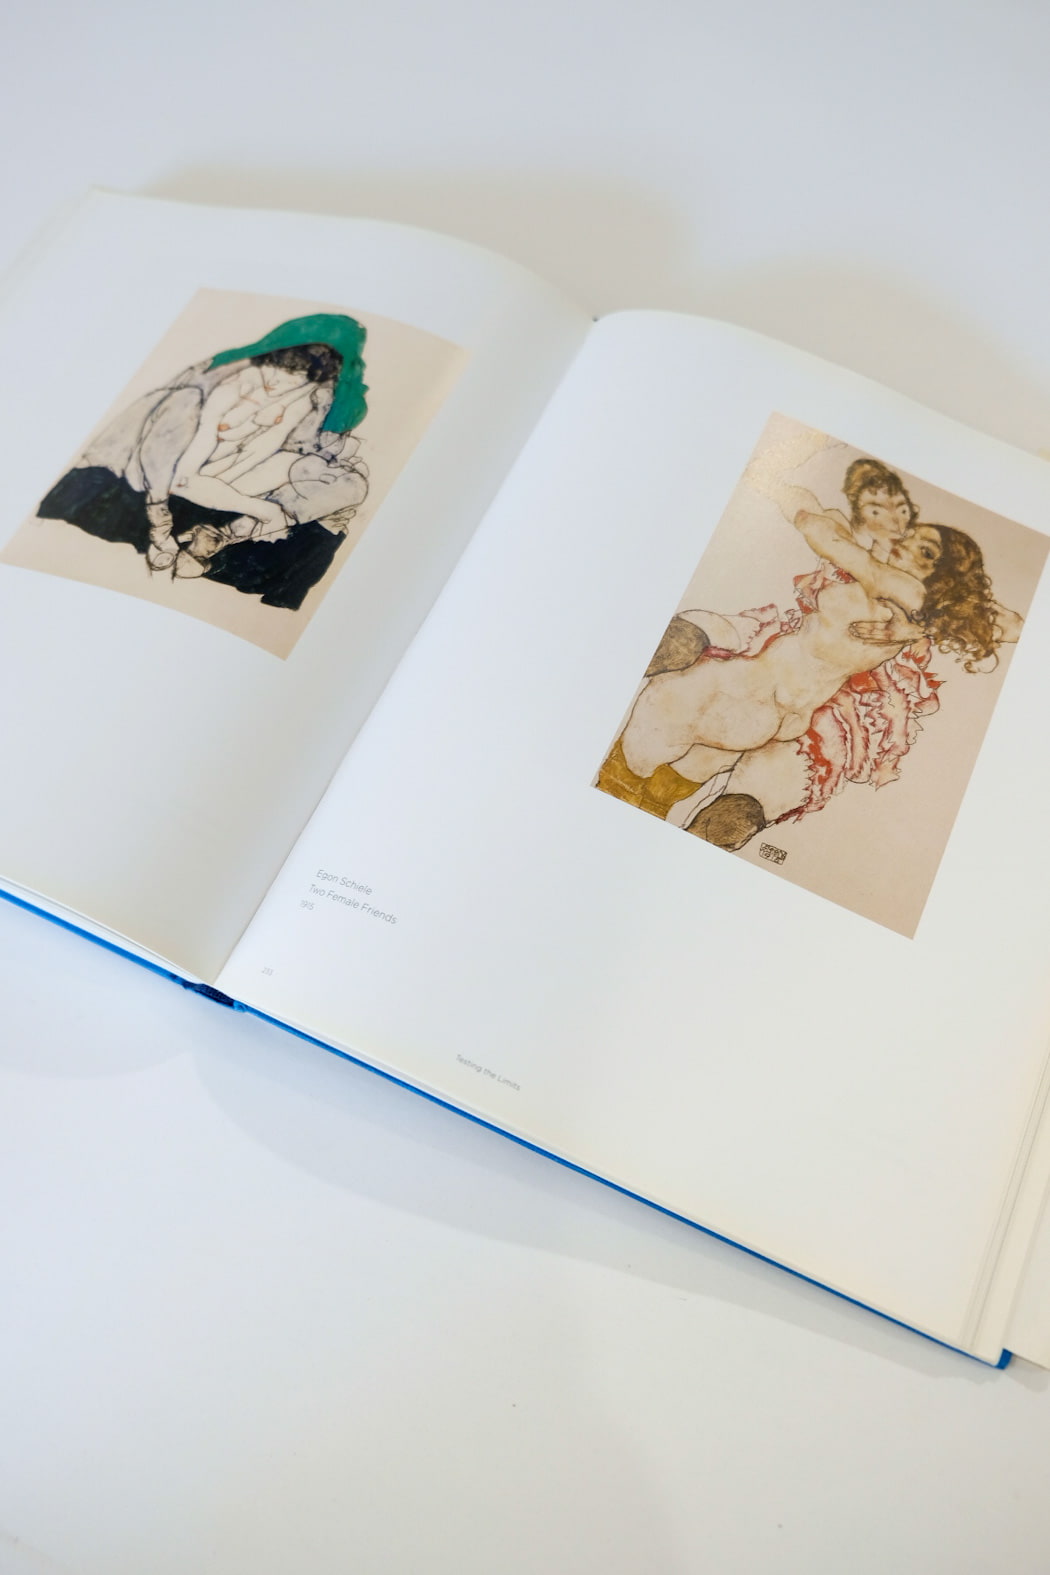 The Naked Truth Klimt Schiele, Kokoschka and Other Scandals